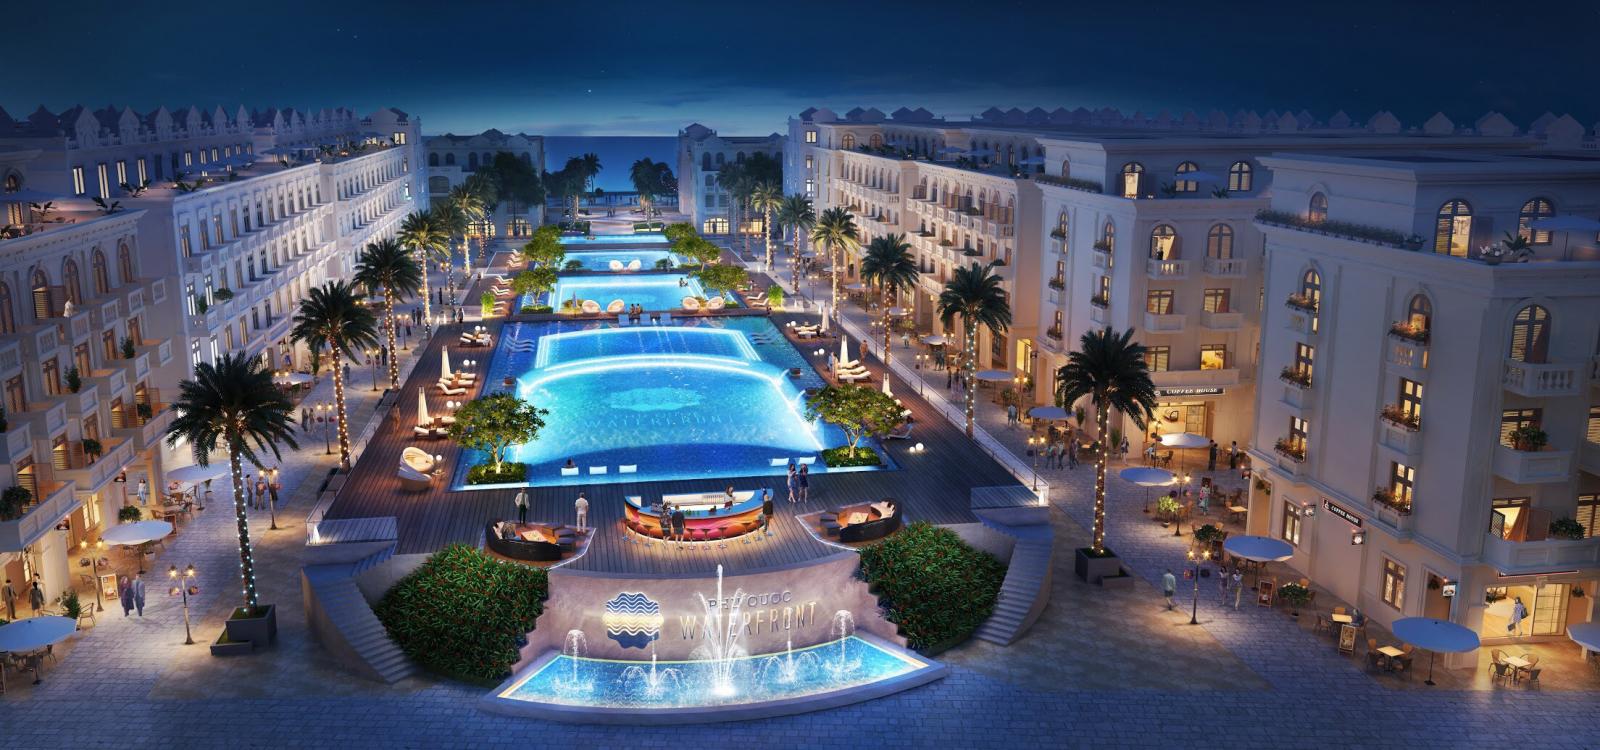 Waterfront Luxury Hotels